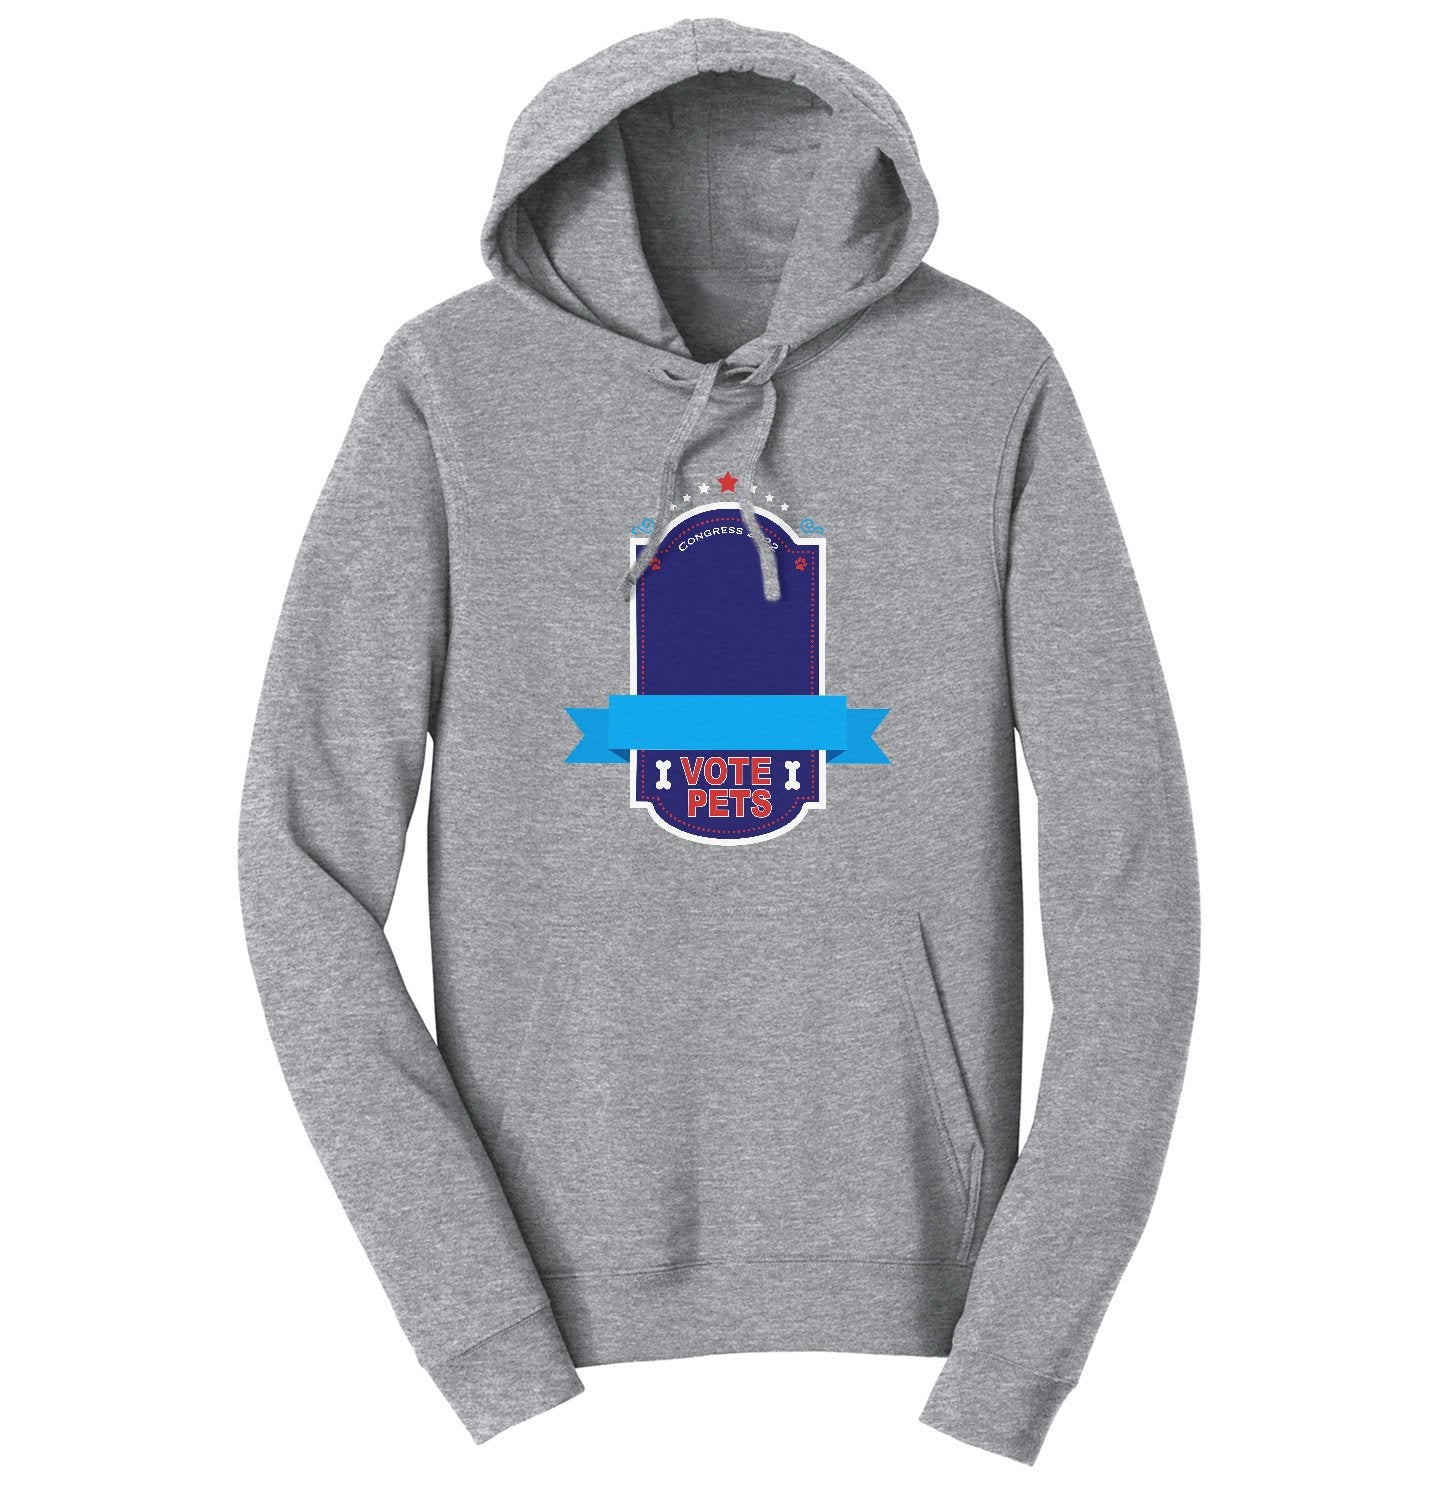 Vote Pets Candidate - Personalized Custom Adult Unisex Hoodie Sweatshirt